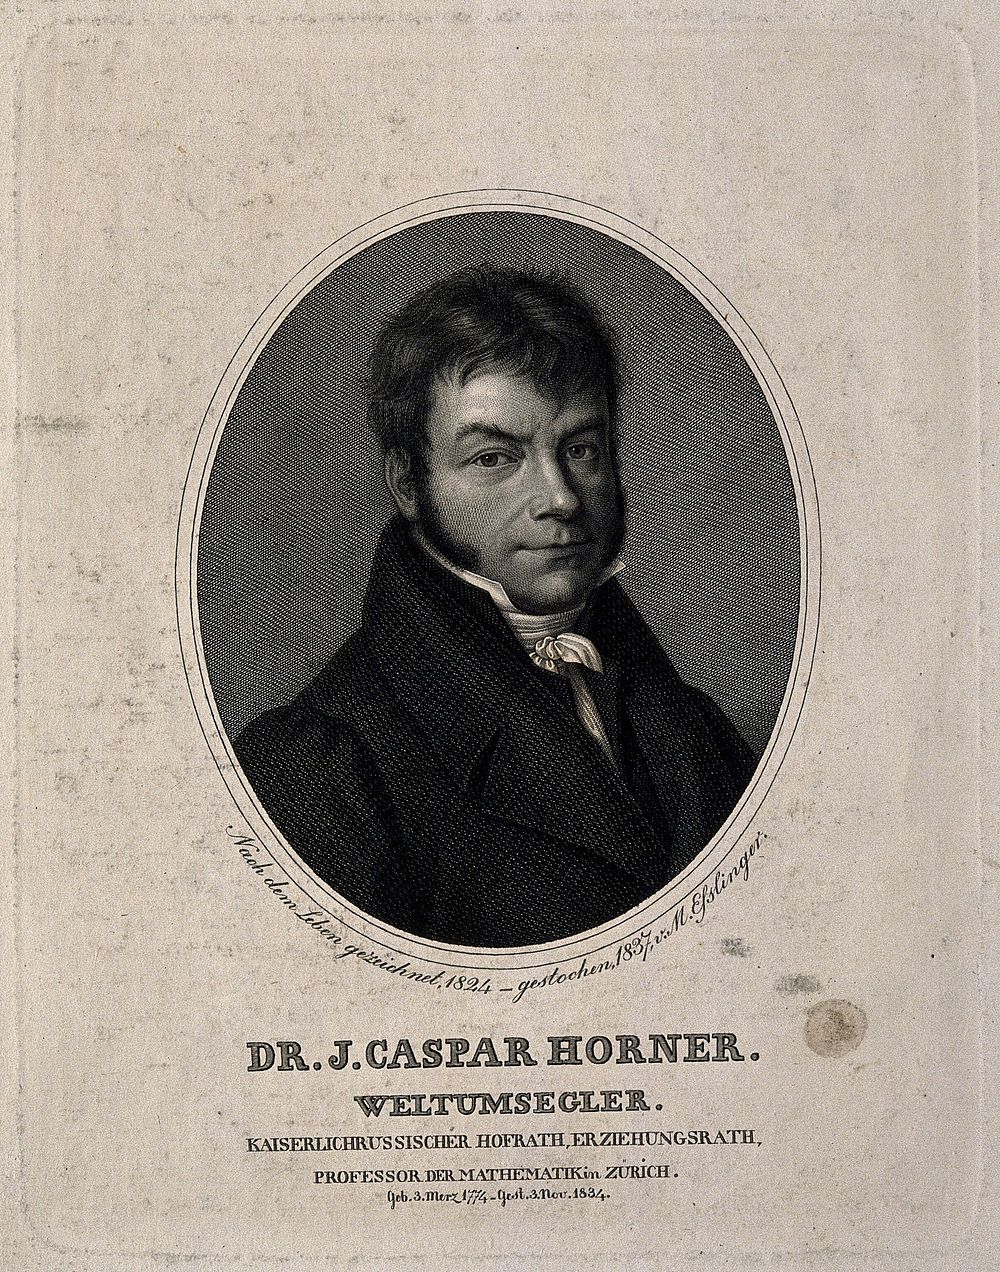 J. Caspar Horner. Stipple engraving by M. Esslinger, 1837.